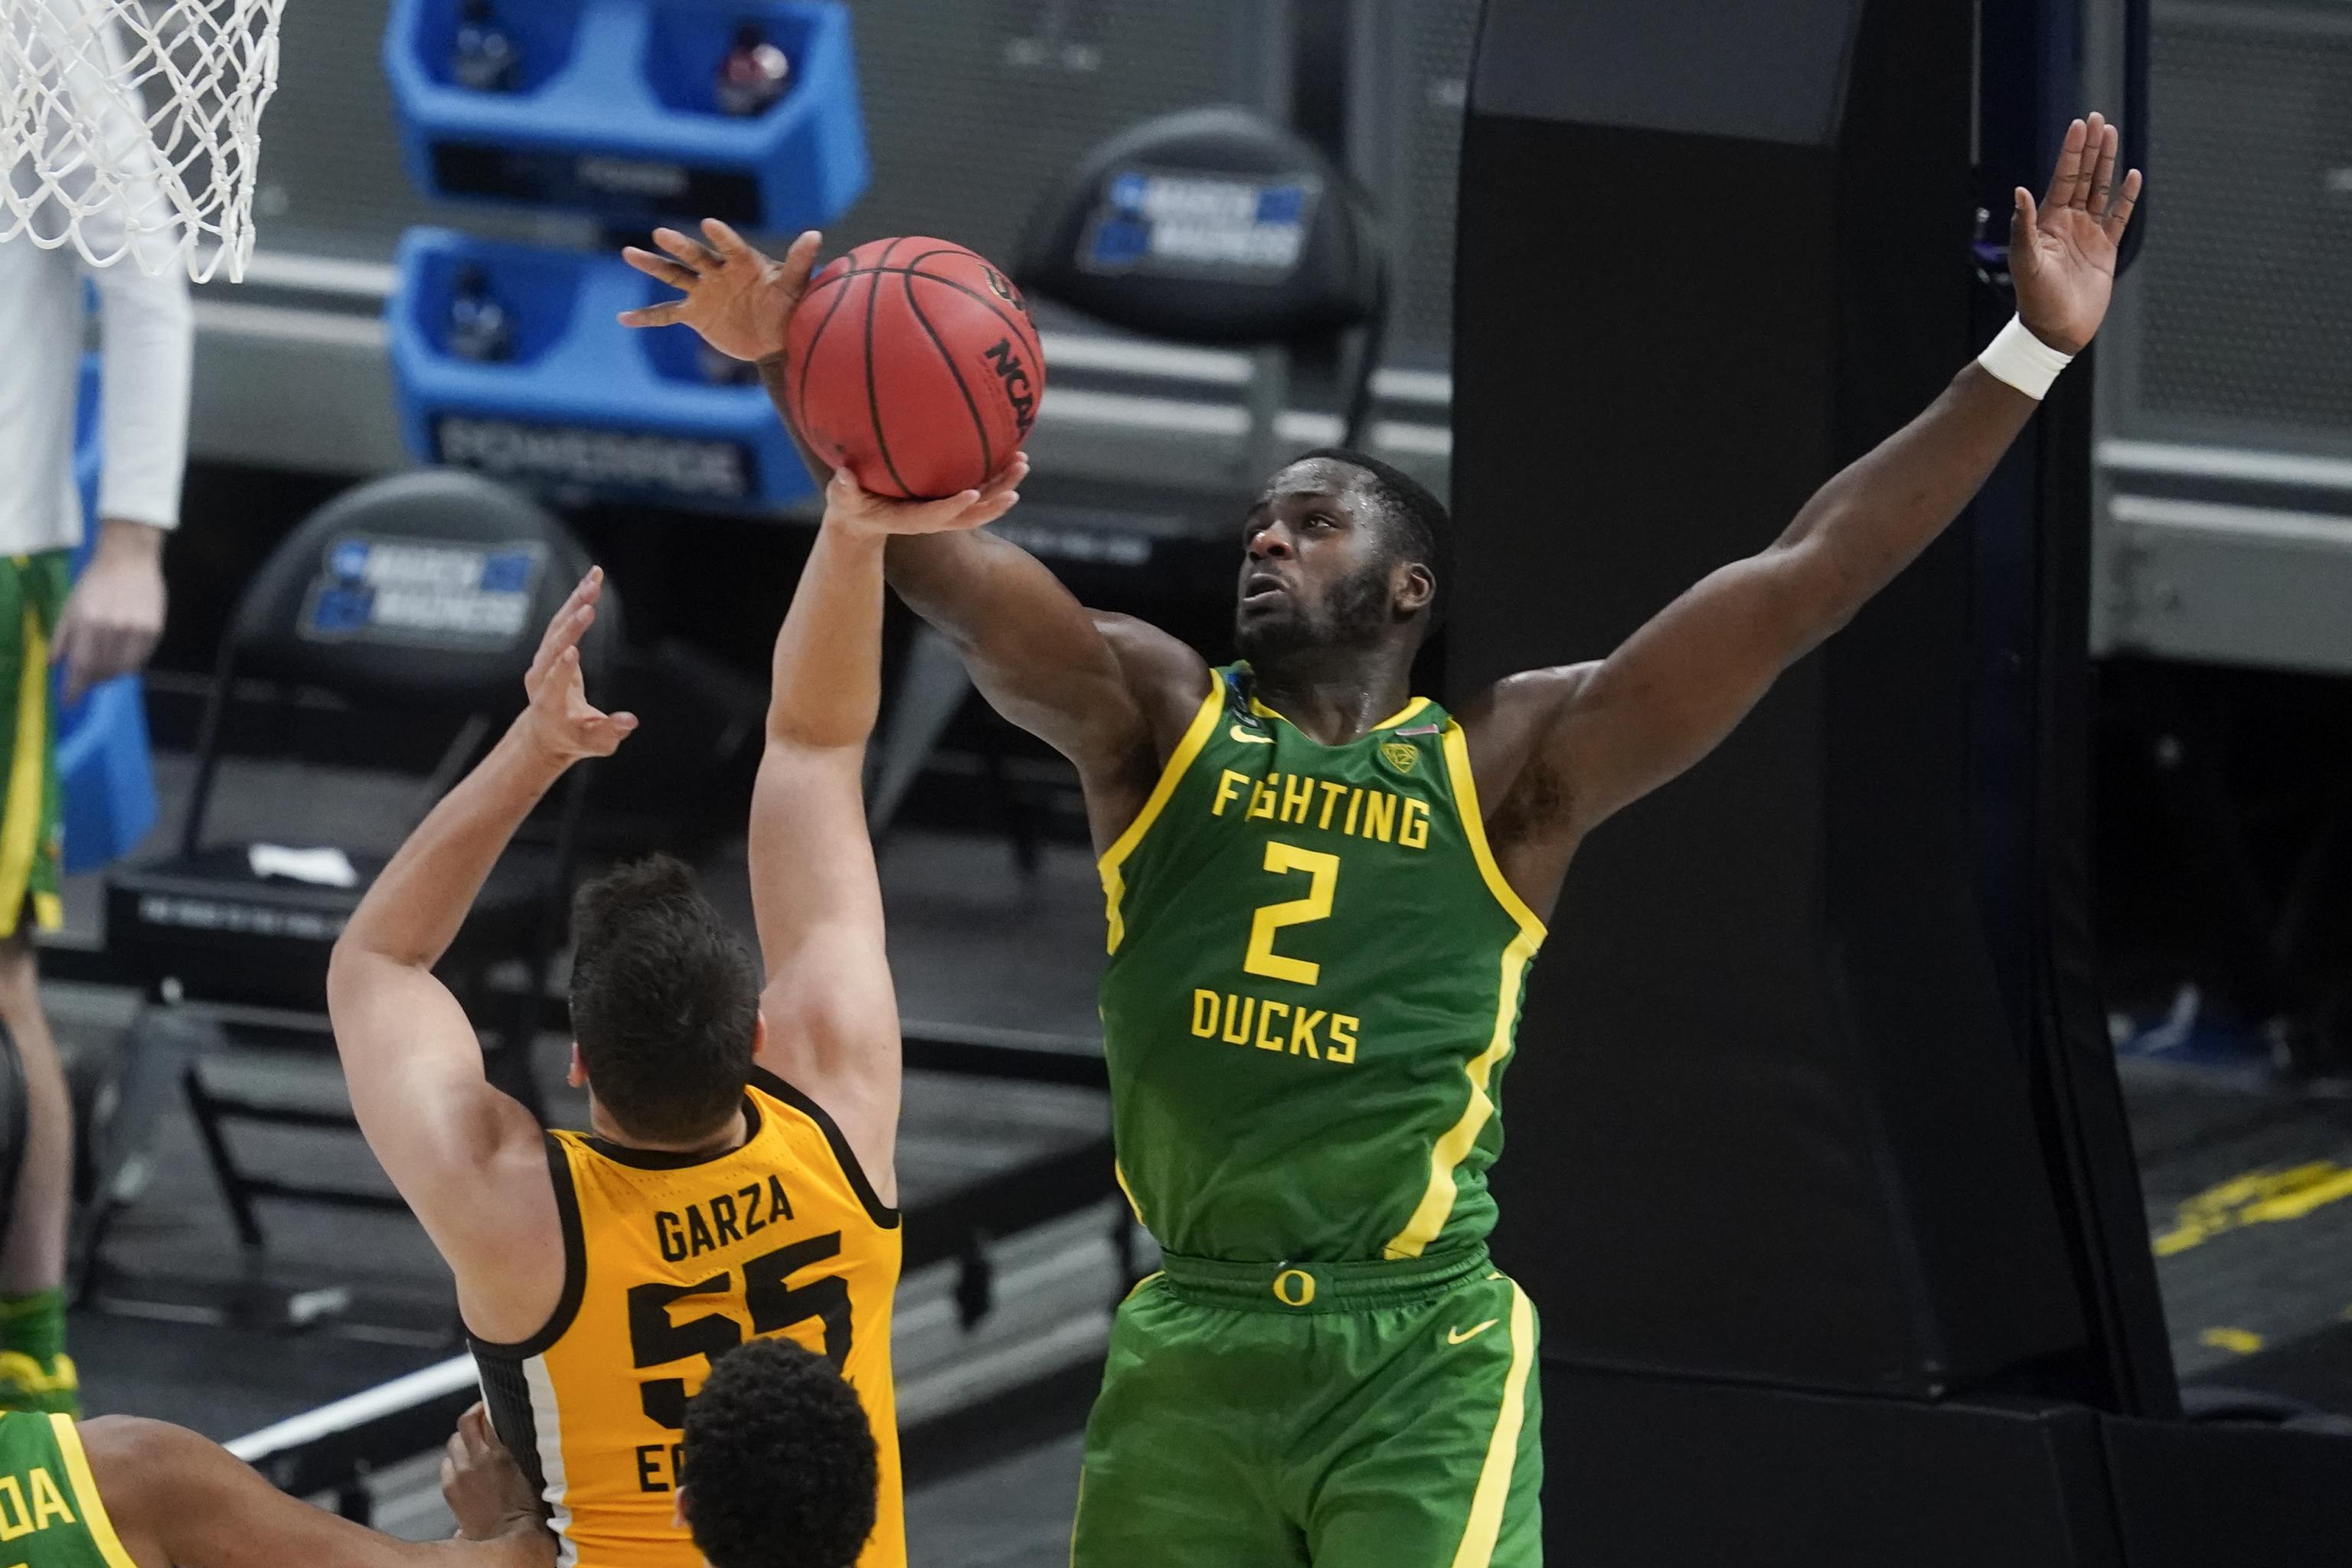 Oregon men's basketball signee Dior Johnson decommits from Ducks